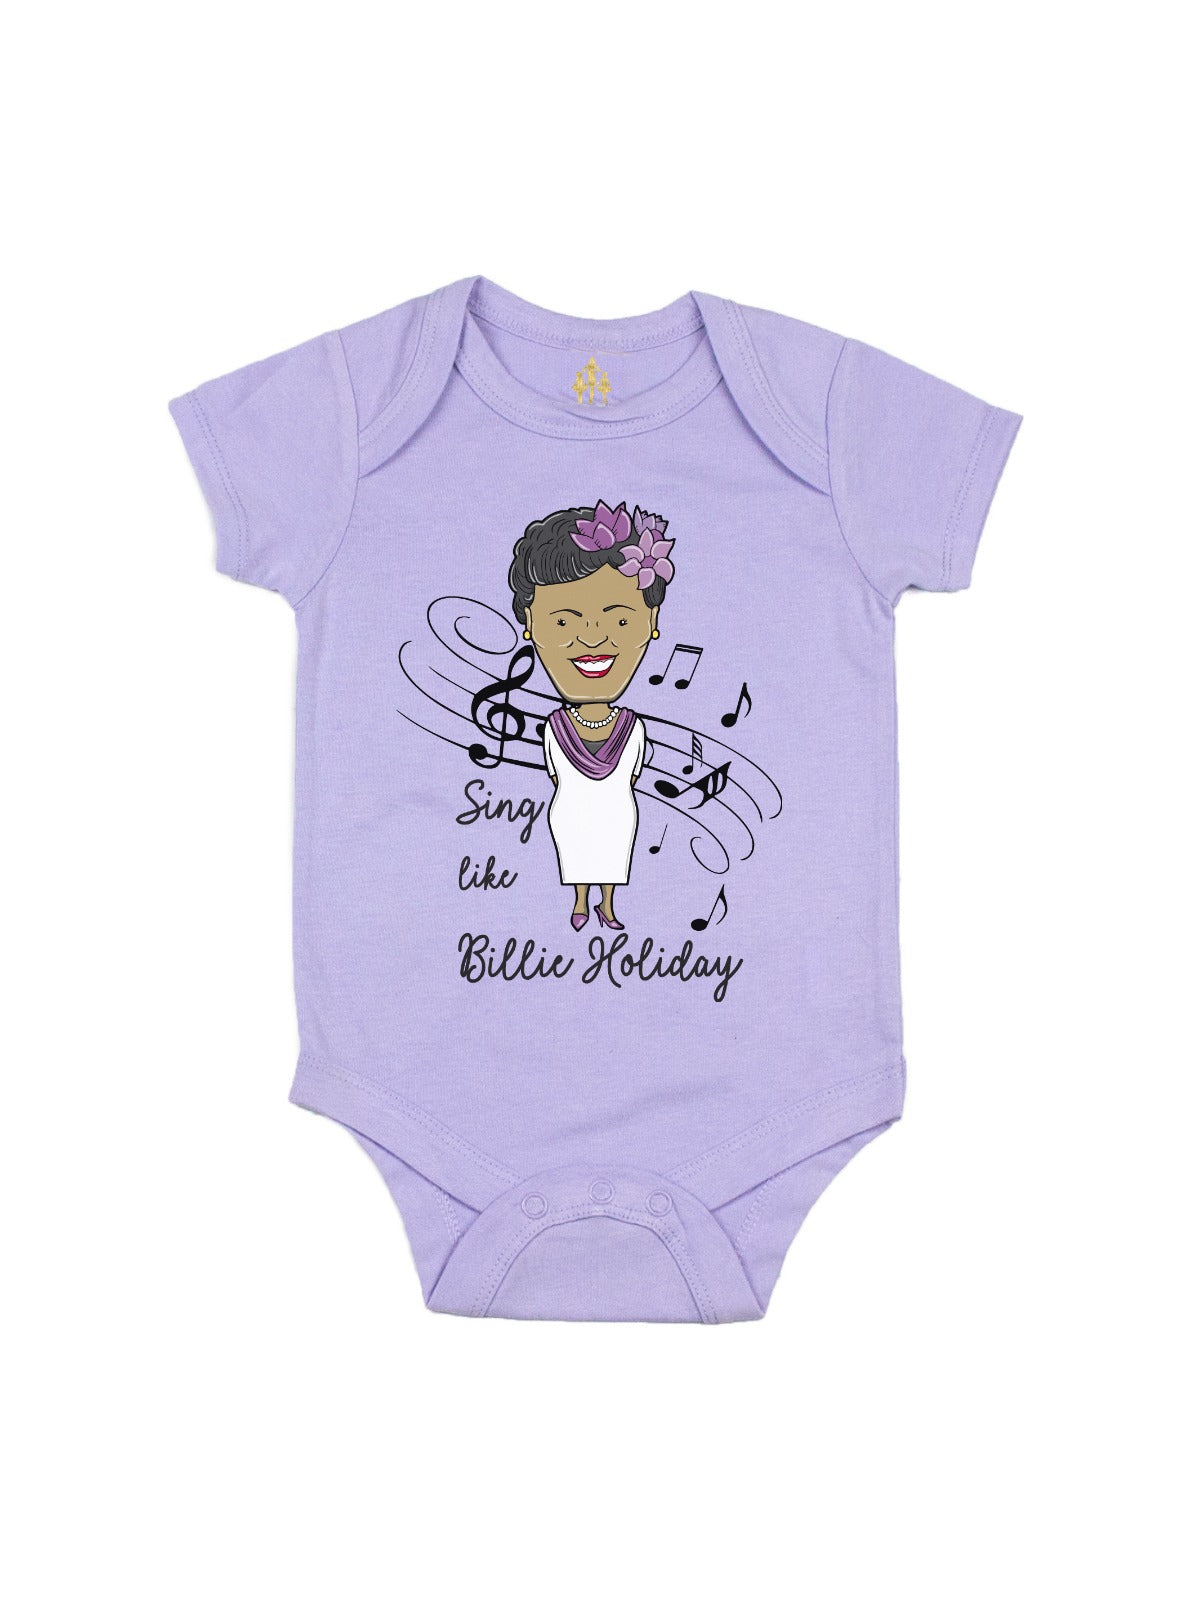 Sing like Billie Holiday Kids Black History Shirt 